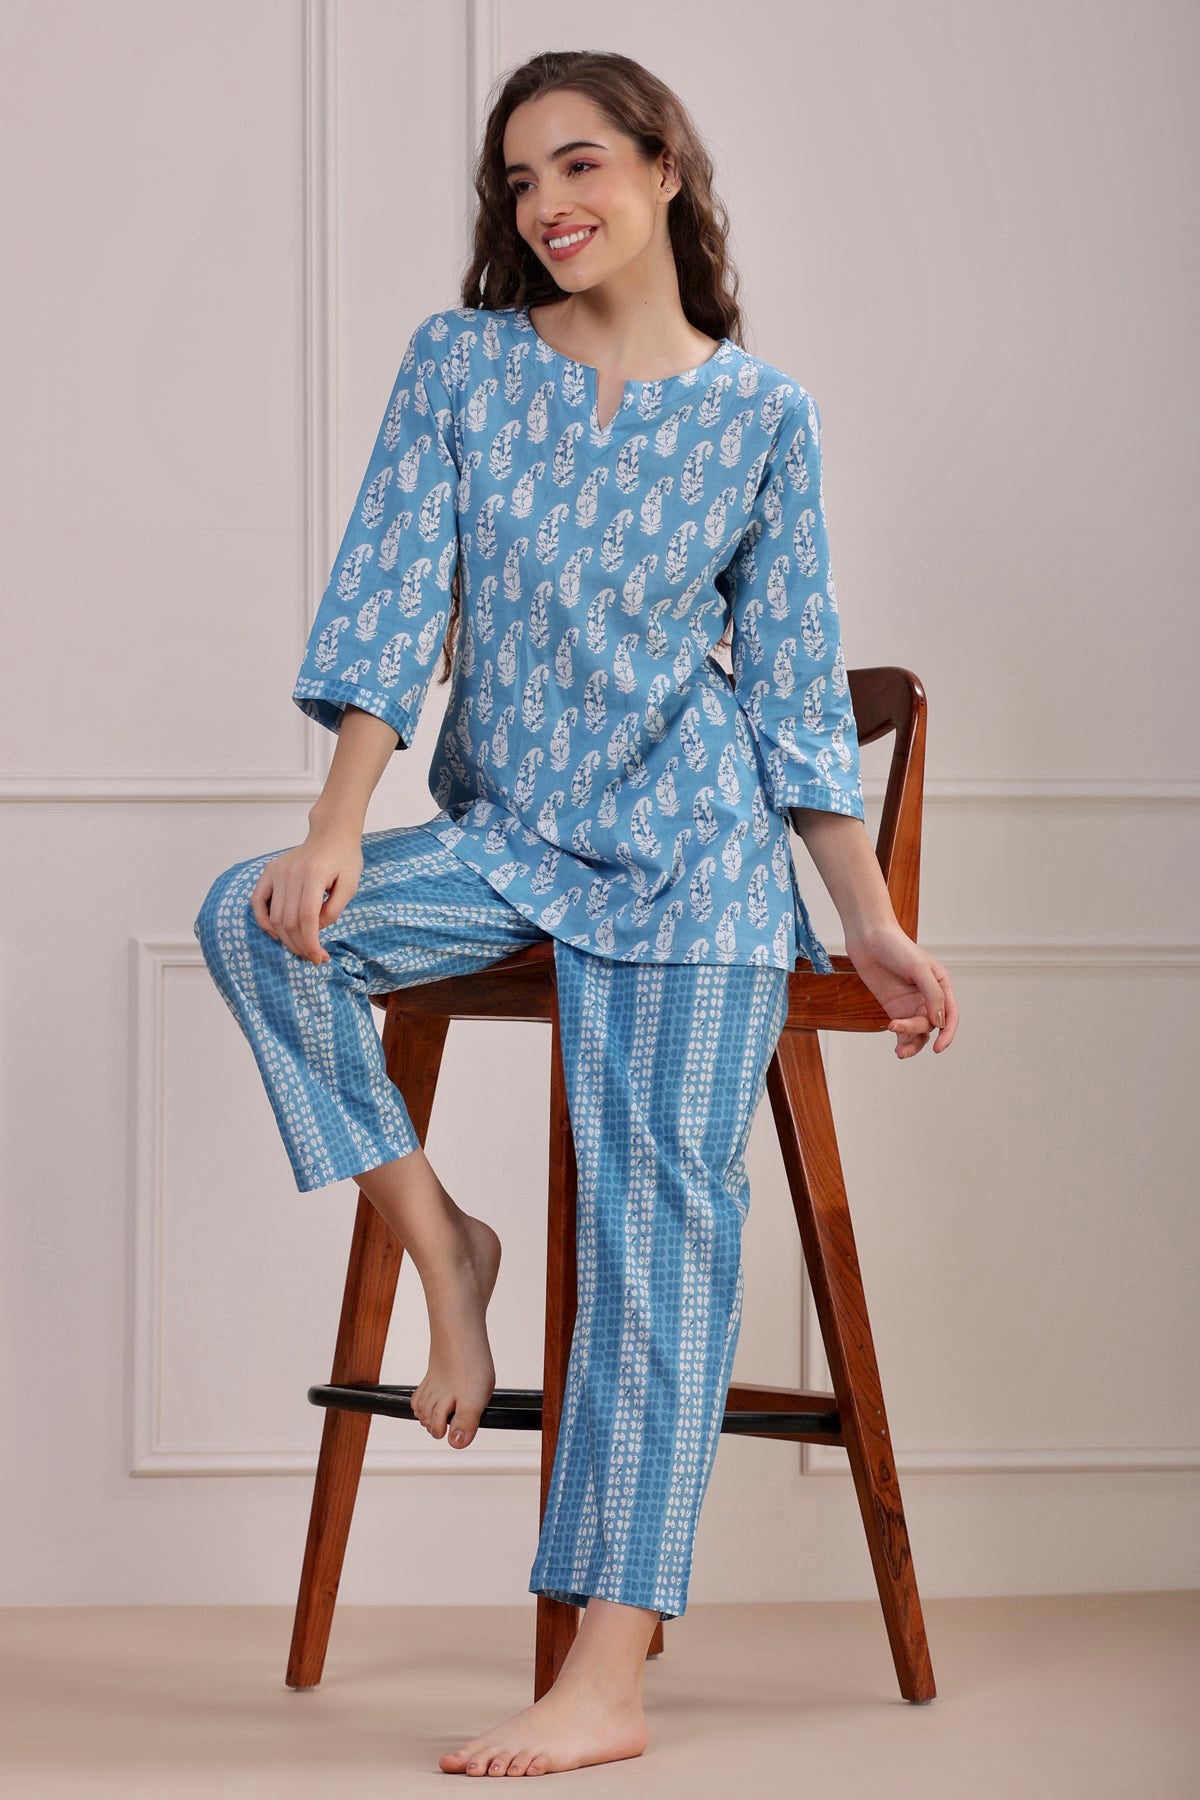 Paisley with Stripes on Blue Loungewear Set